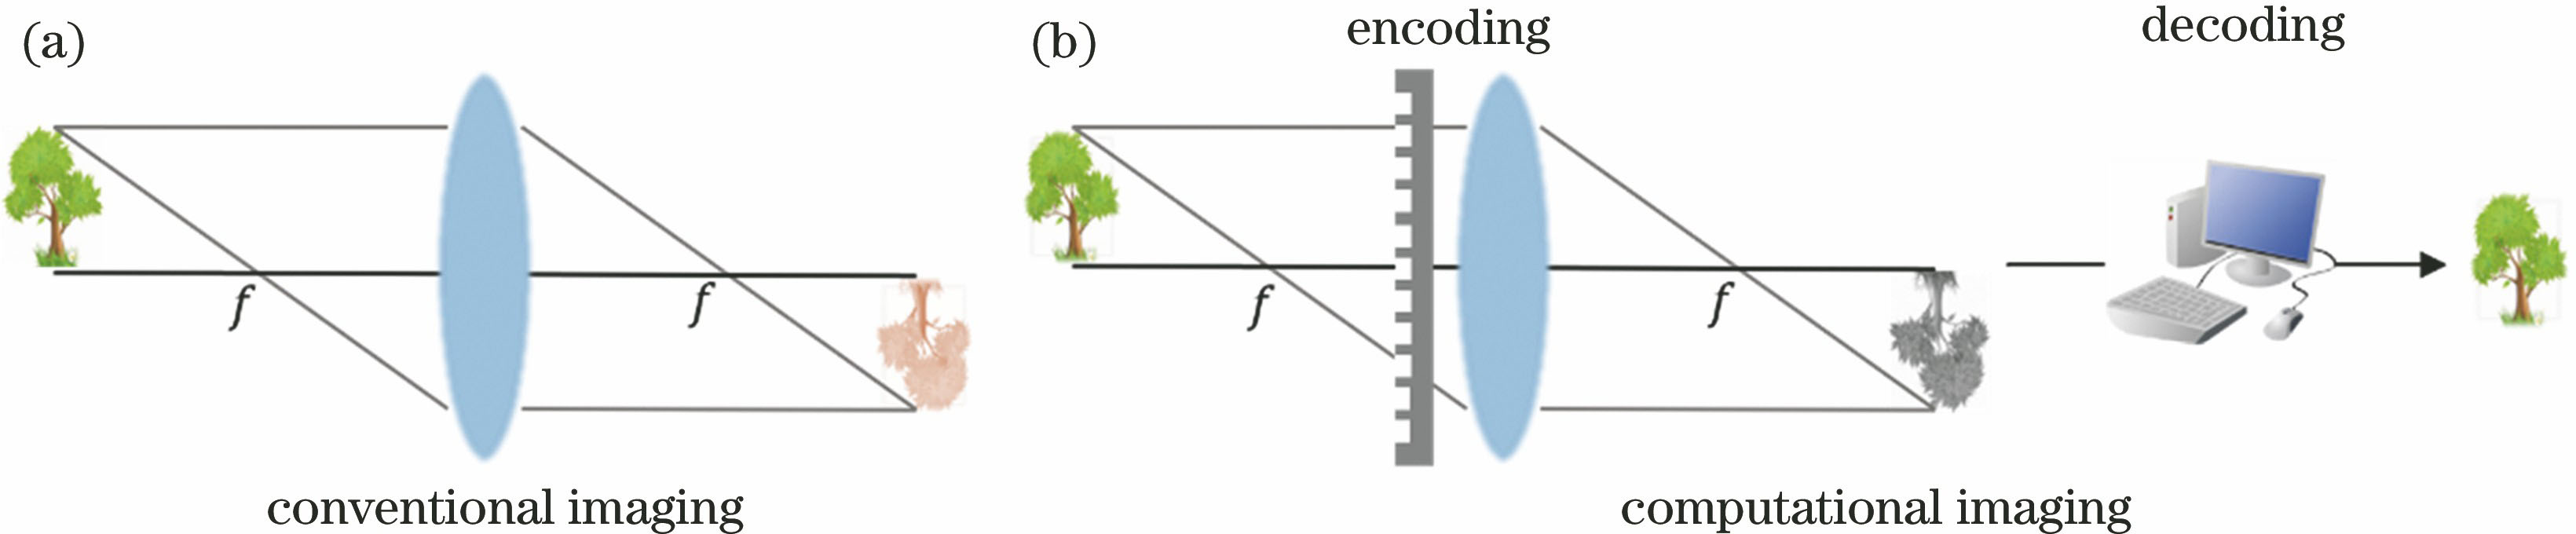 Schematic diagram. (a) Conventional imaging model; (b) computational imaging model